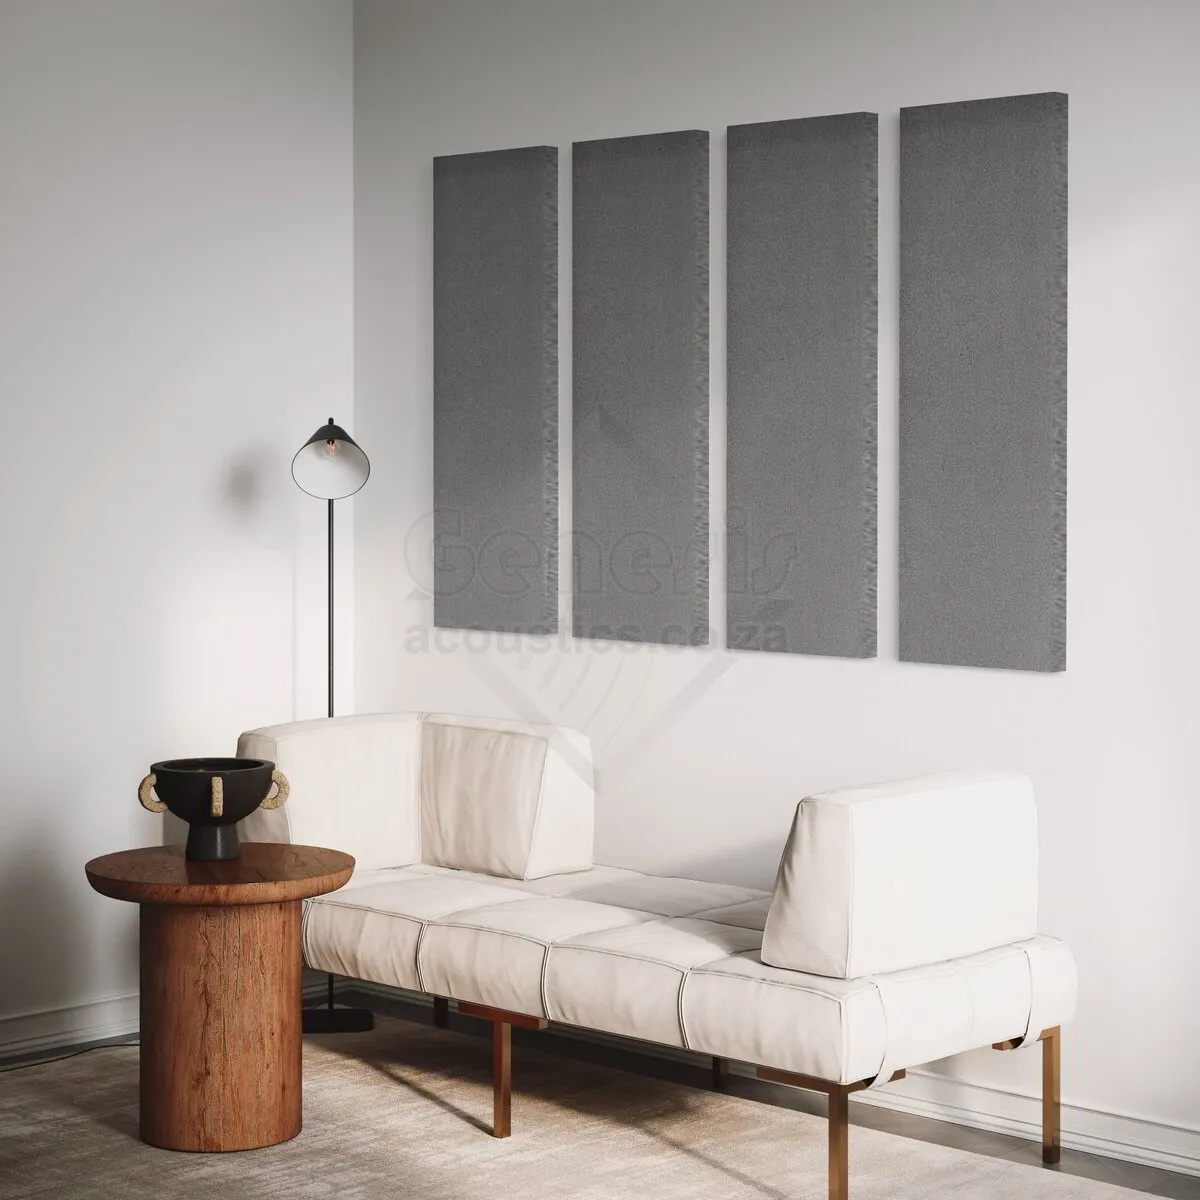 S5 Pro Acoustic Wall Panels - 120cm x 40cm Set of 4 - Stone